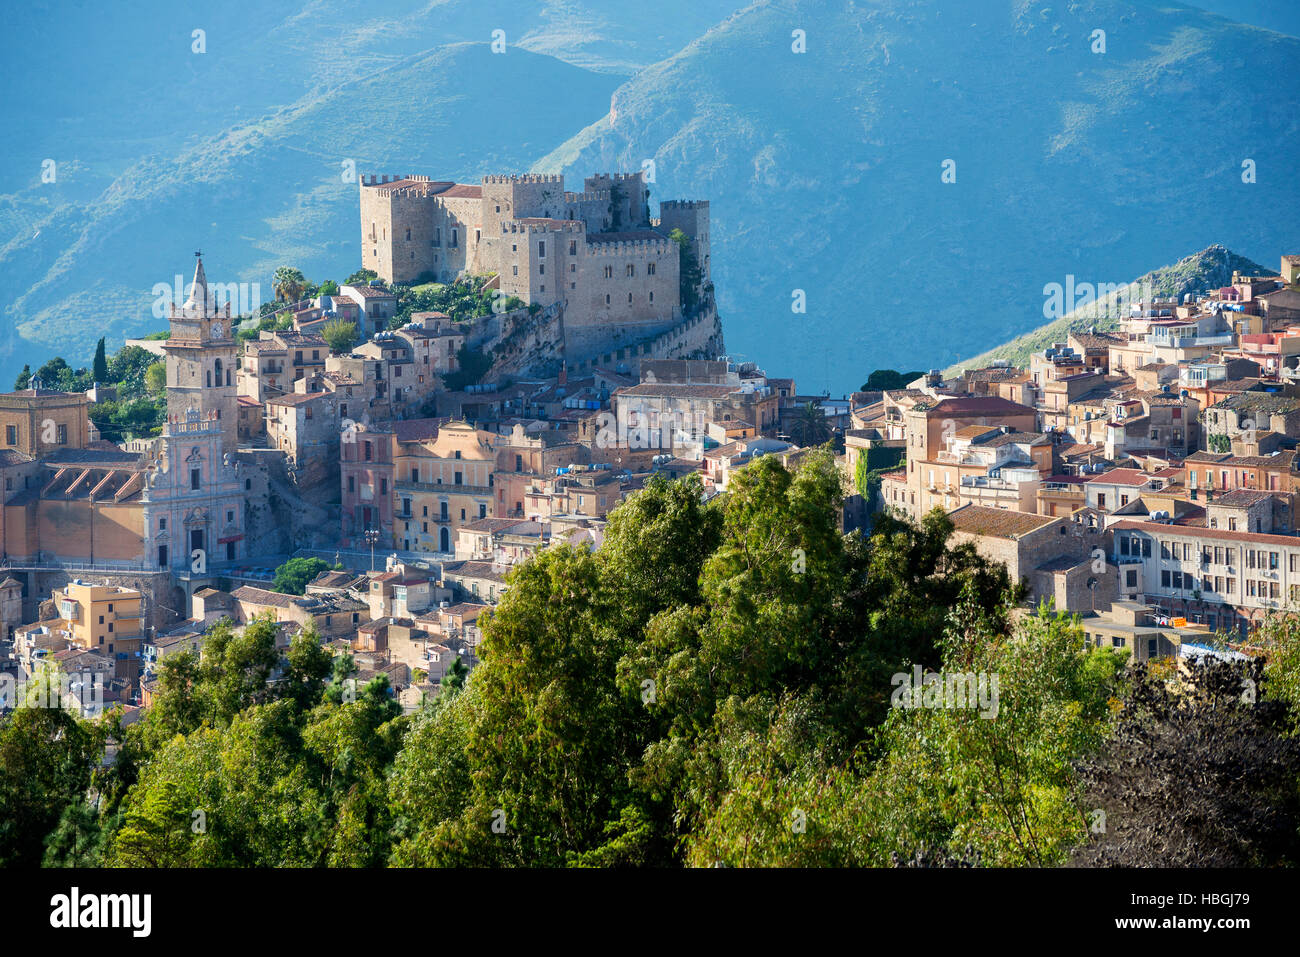 Caccamo castle, Caccamo, Sicily Stock Photo